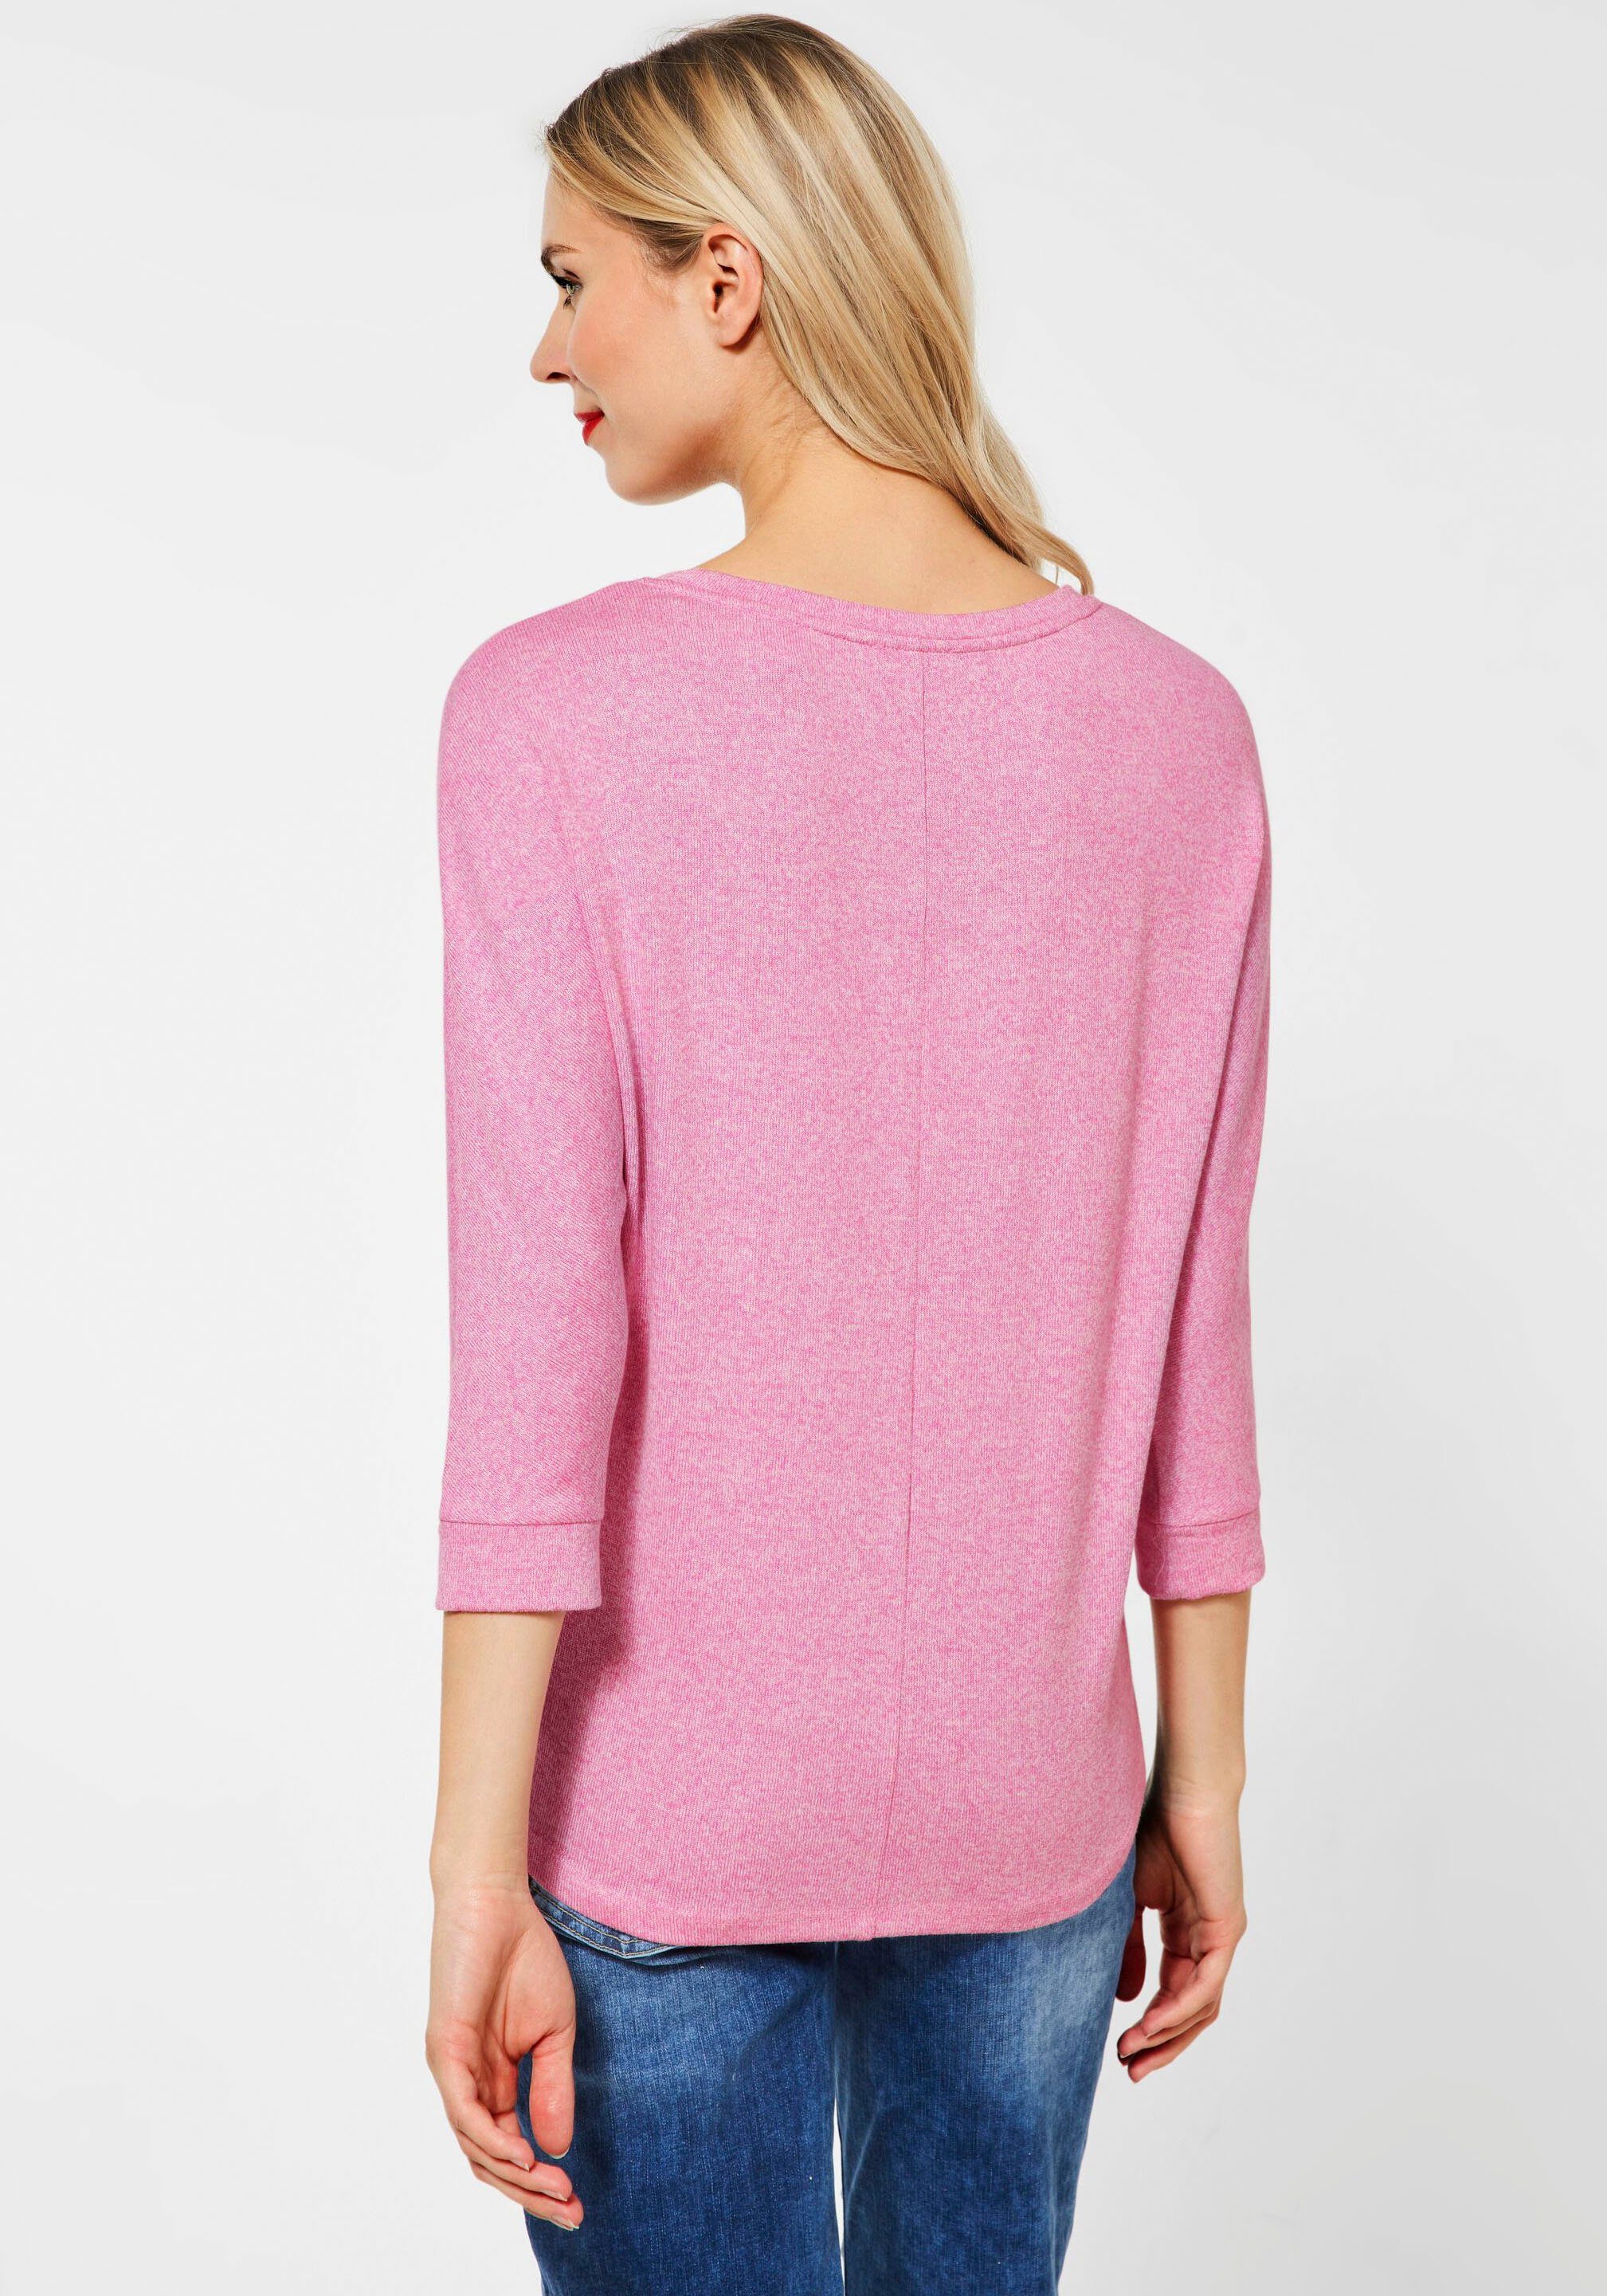 STREET ONE Style Melange-Optik melange crush pink Ellen in 3/4-Arm-Shirt